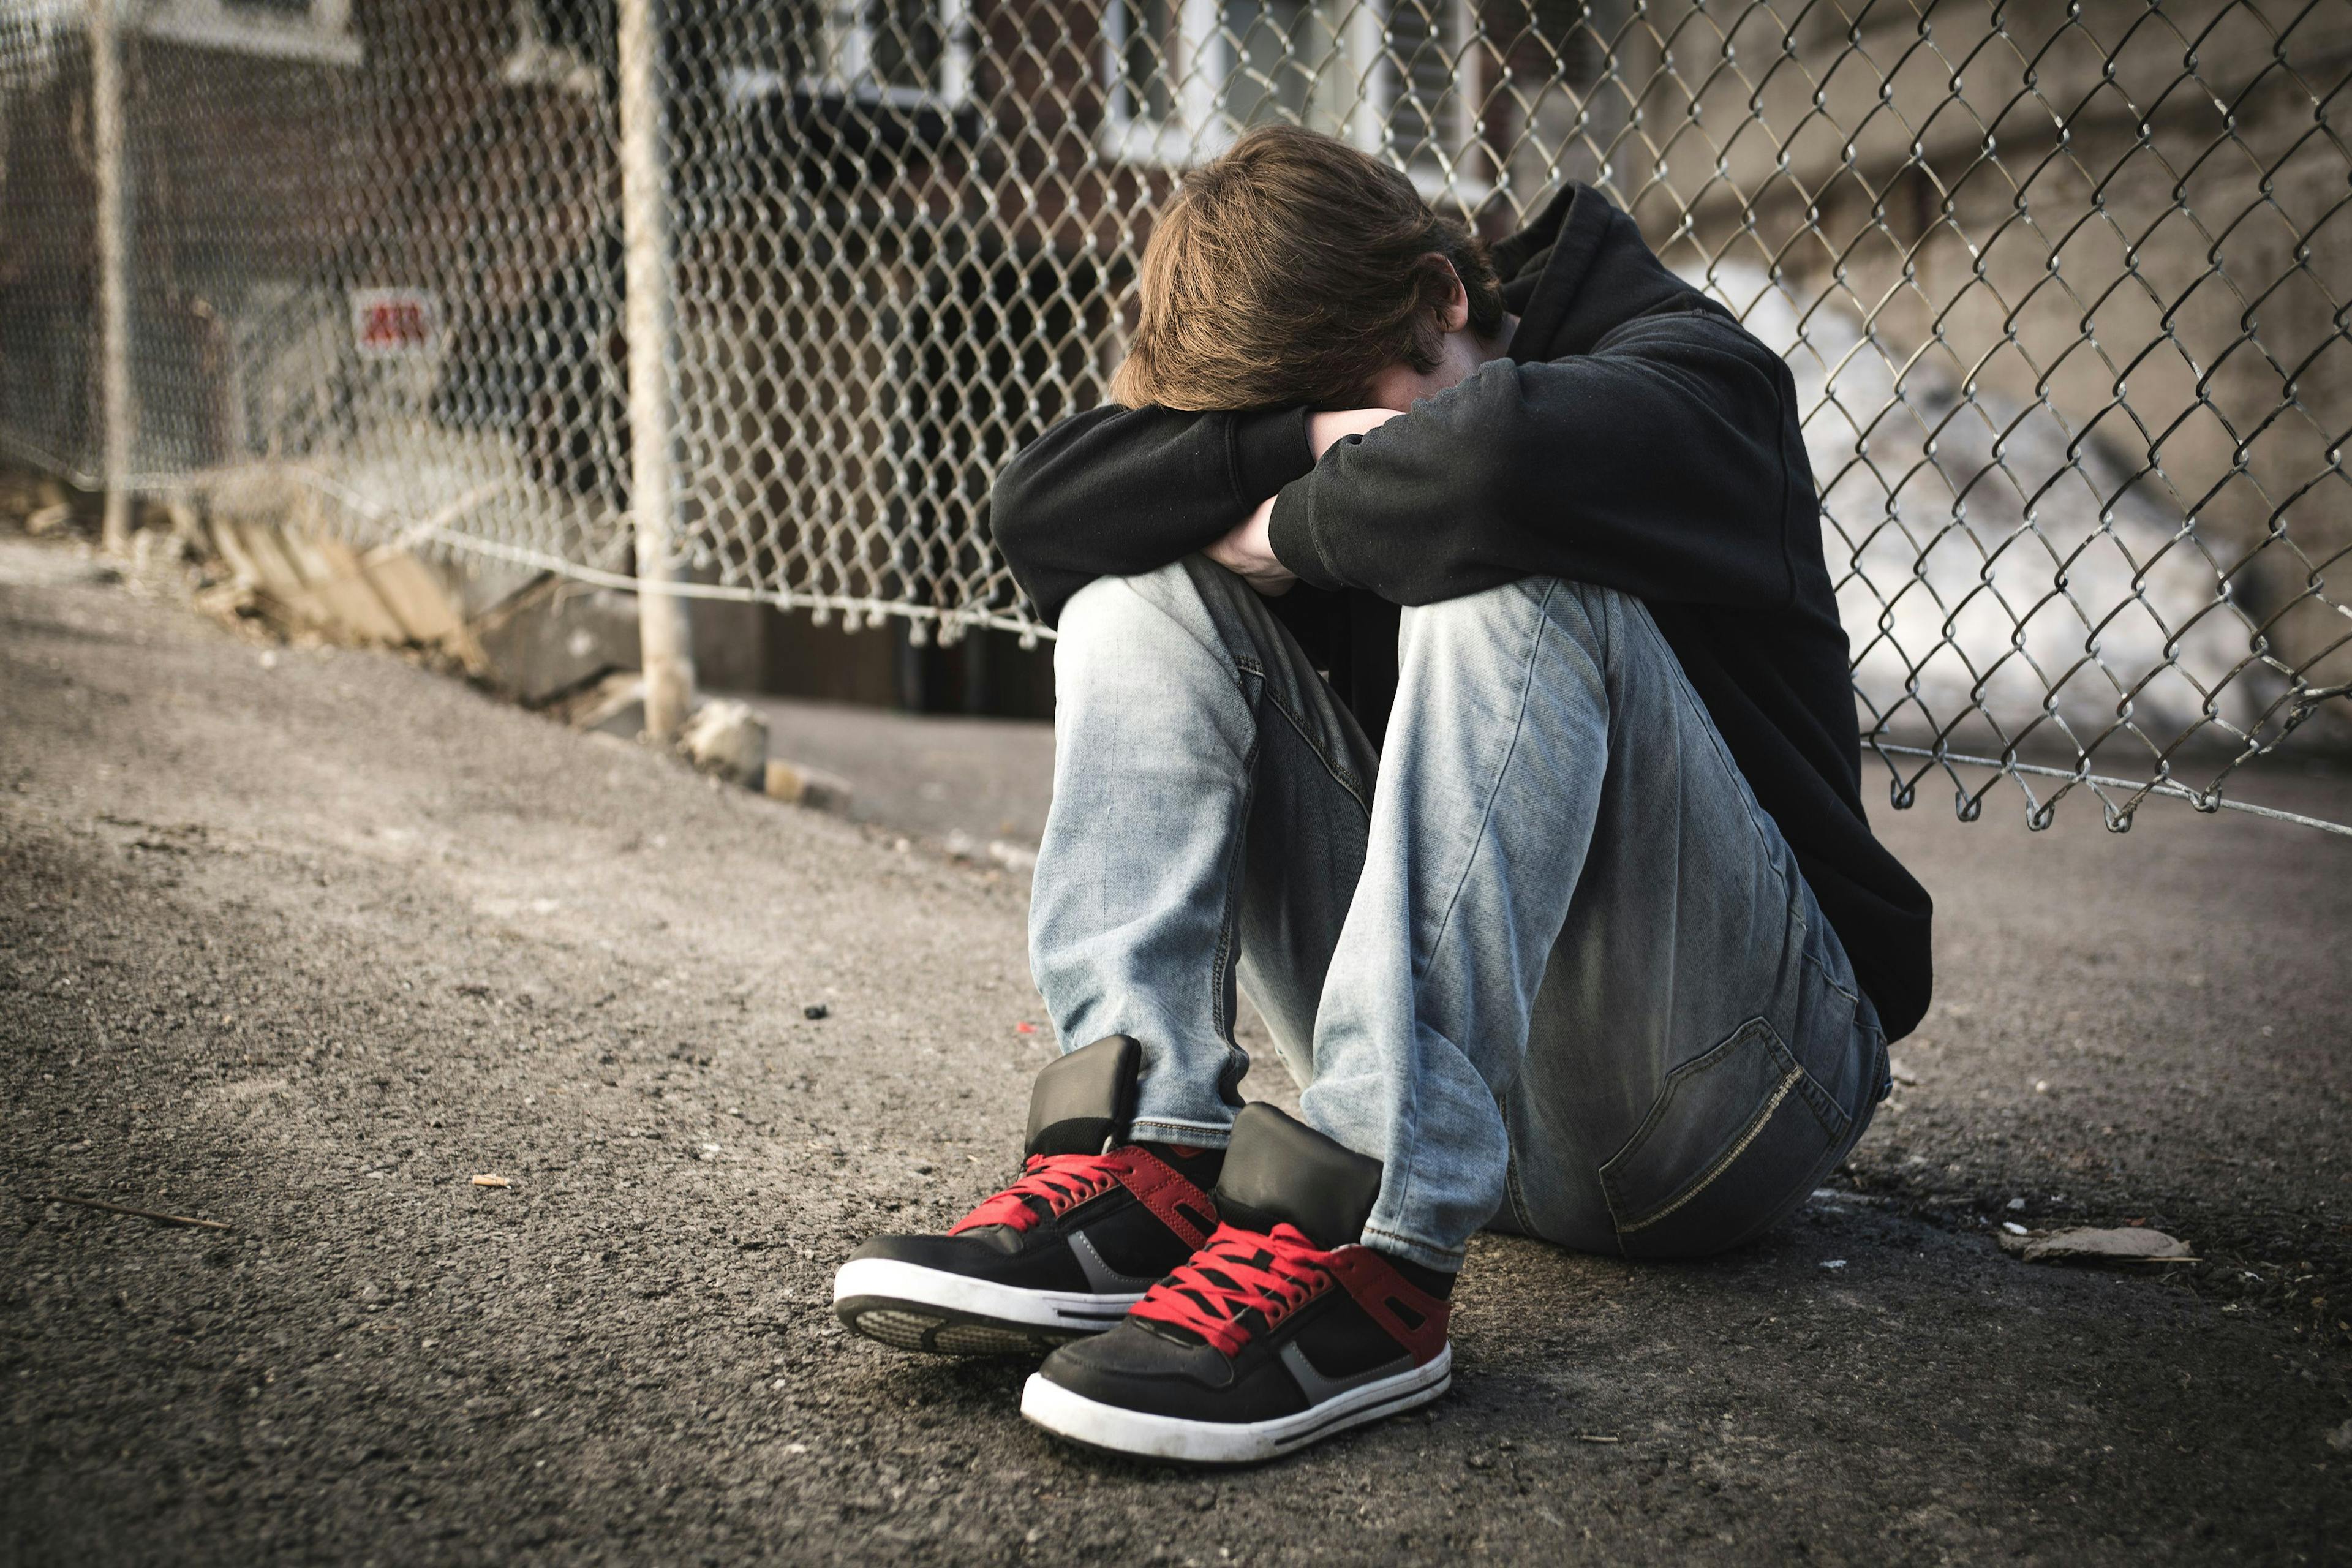 Female teen antidepressant use rose, male teens saw a decline amid COVID-19 | Image Credit: © pololia - © pololia - stock.adobe.com.